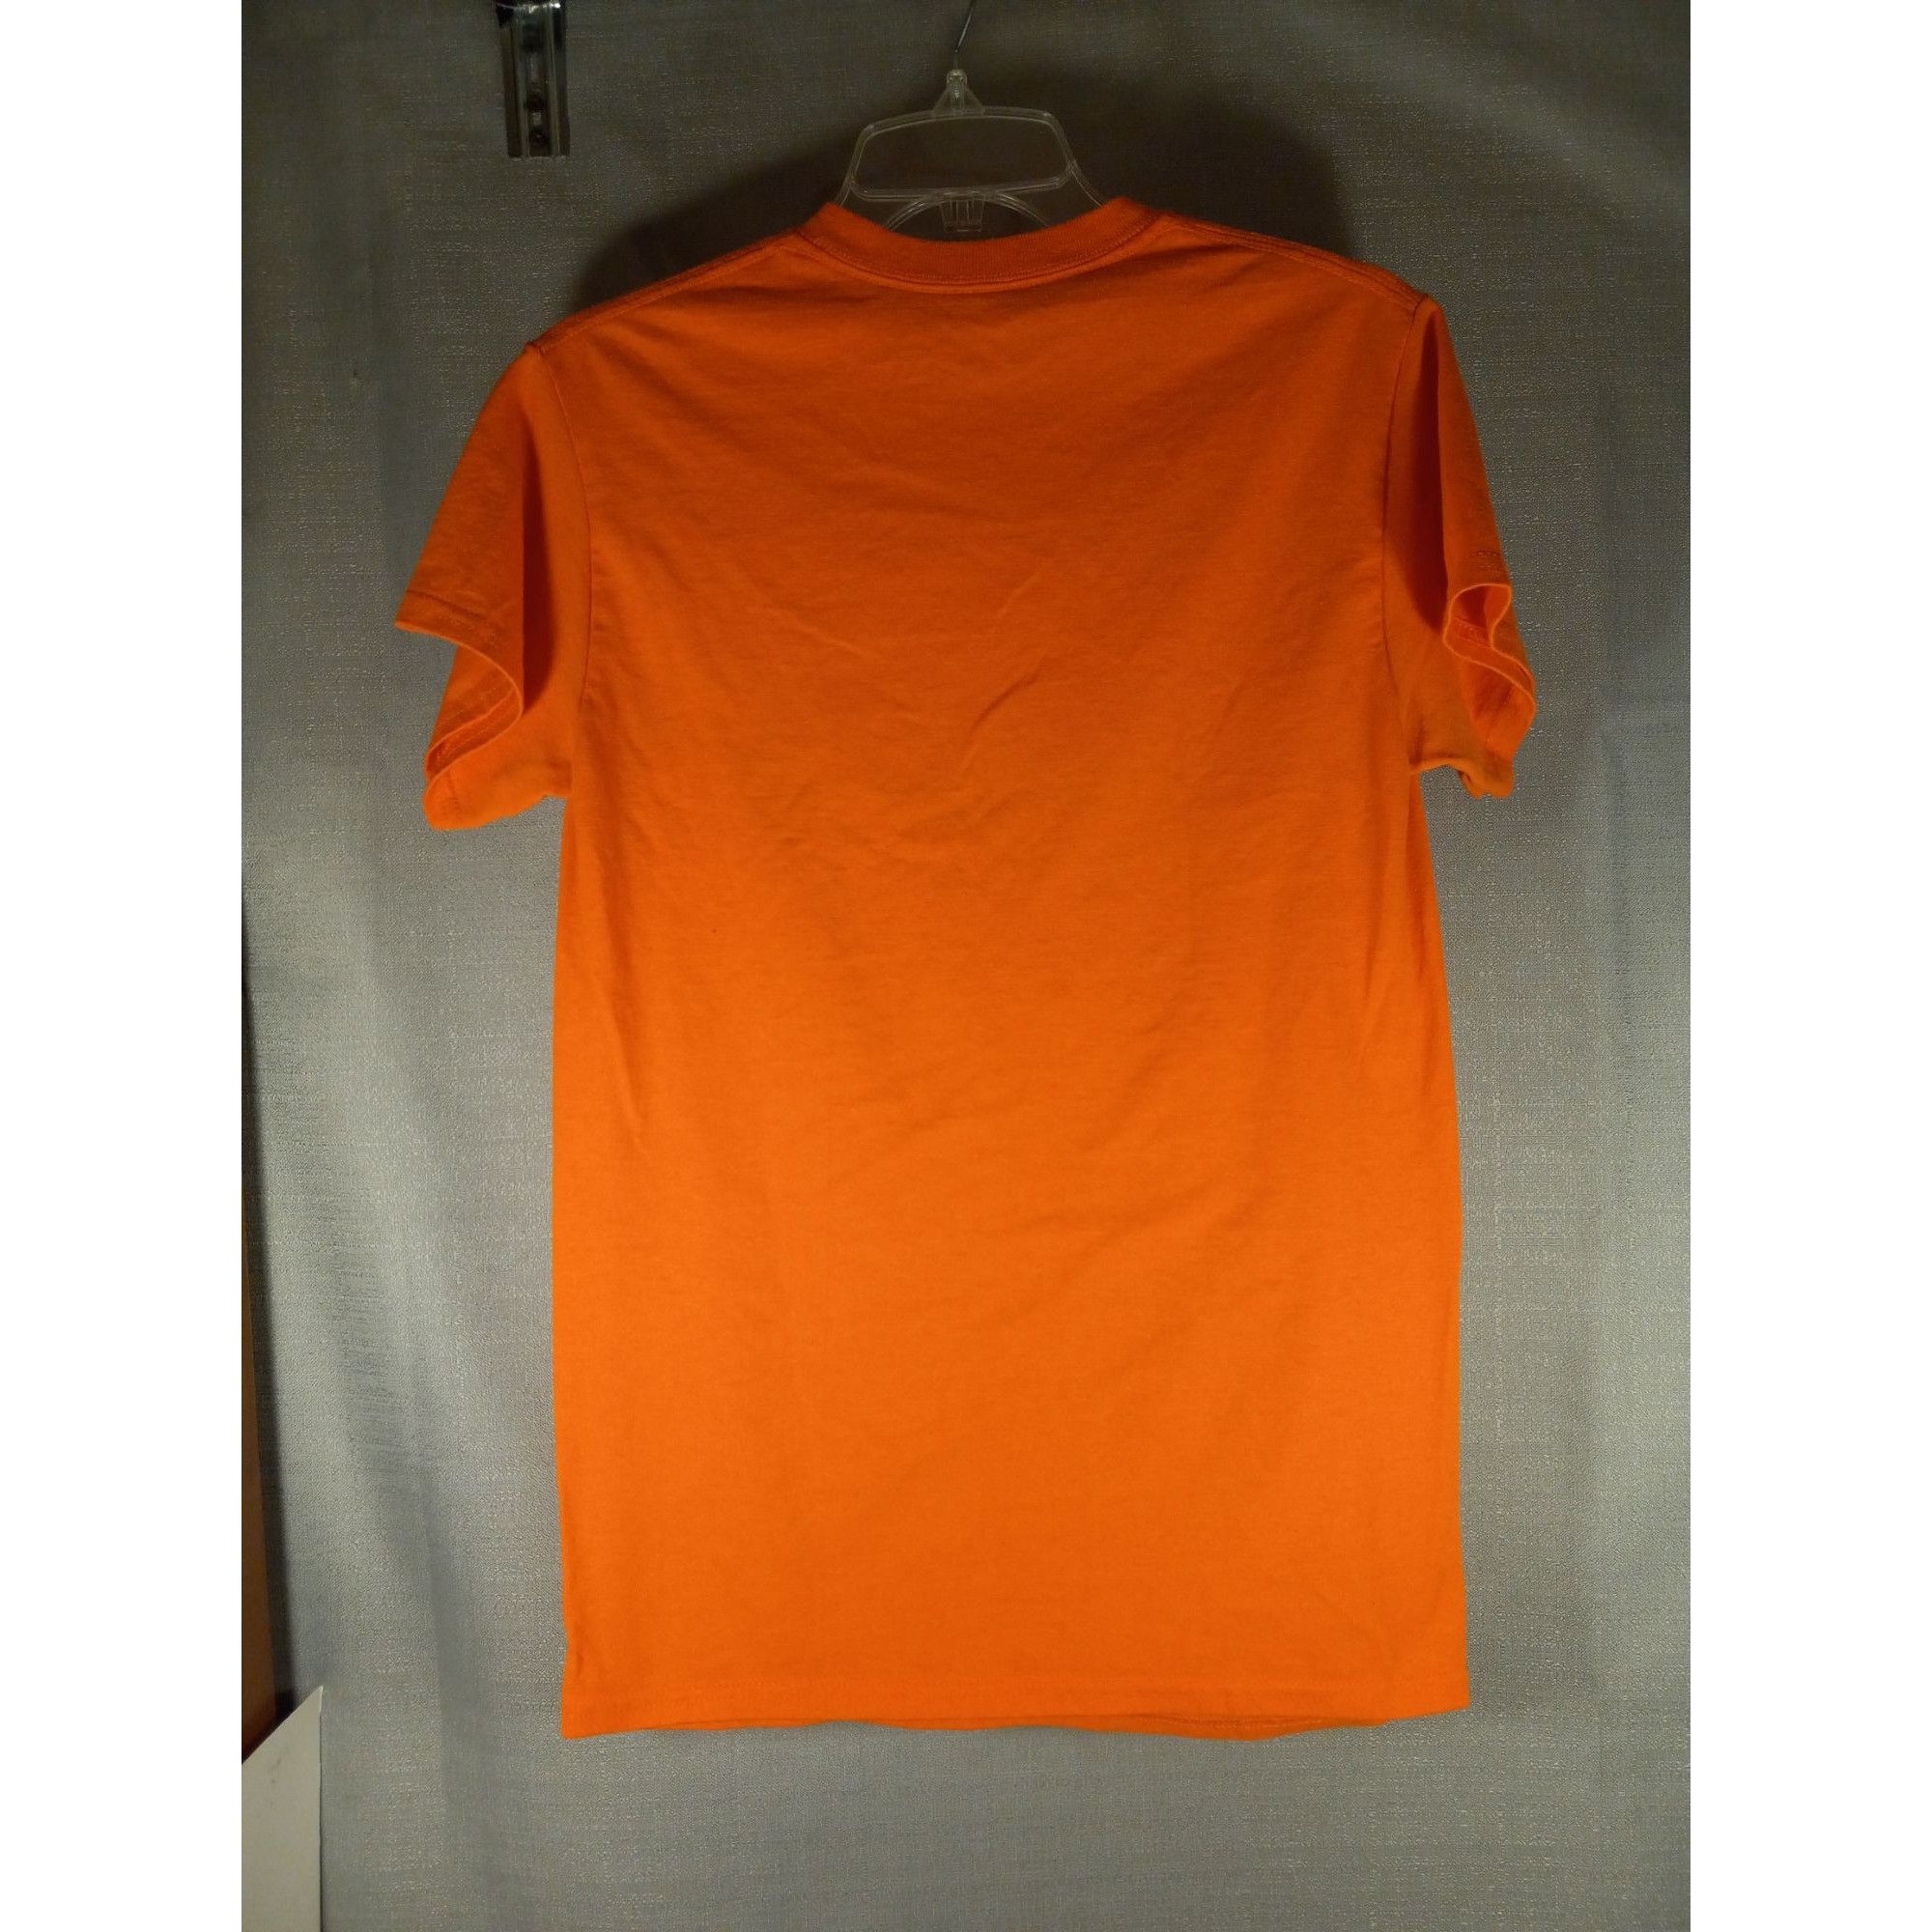 Dope DOPE orange Camo LOGO short sleeve t-shirt size s Size US S / EU 44-46 / 1 - 2 Preview